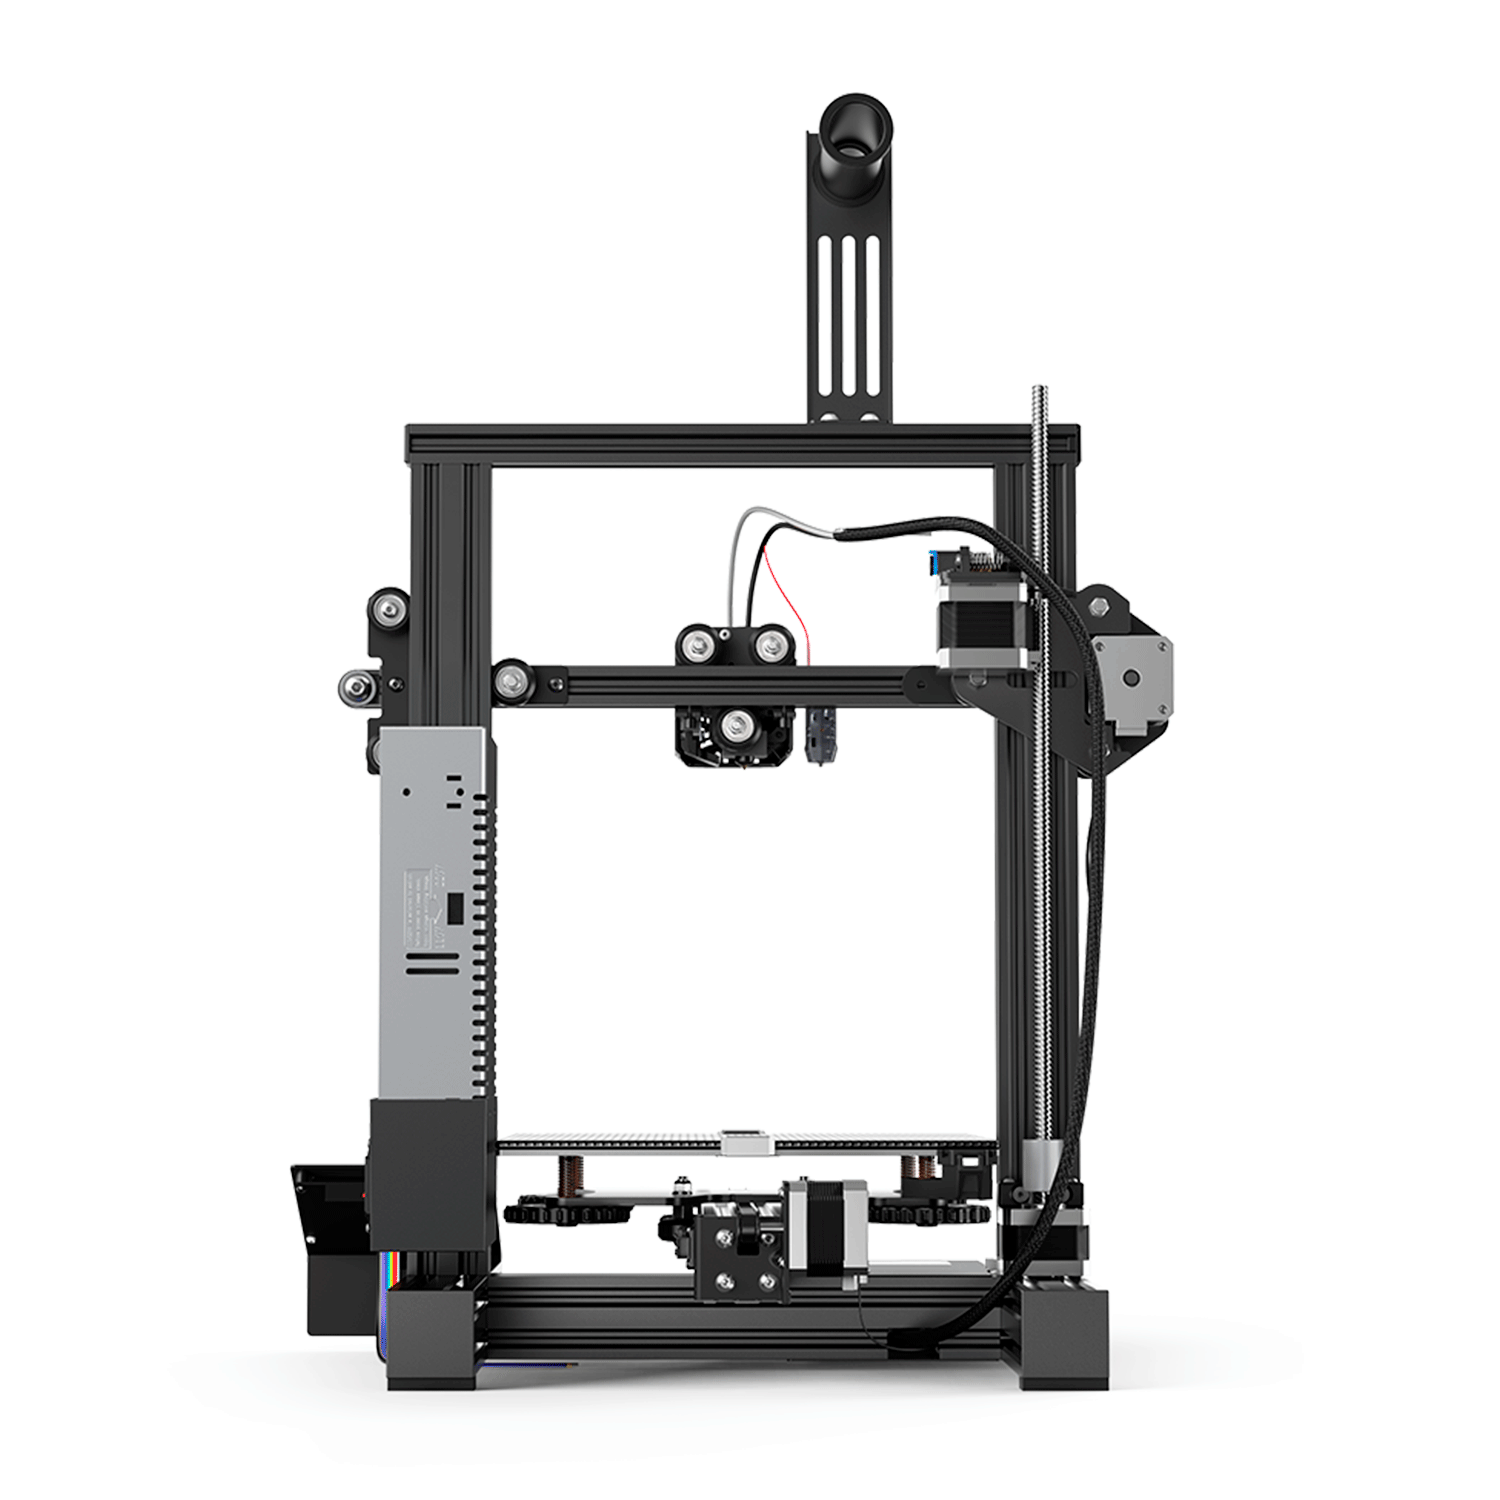 Impressora 3D Creality Ender 3 Neo (220*220*250MM)